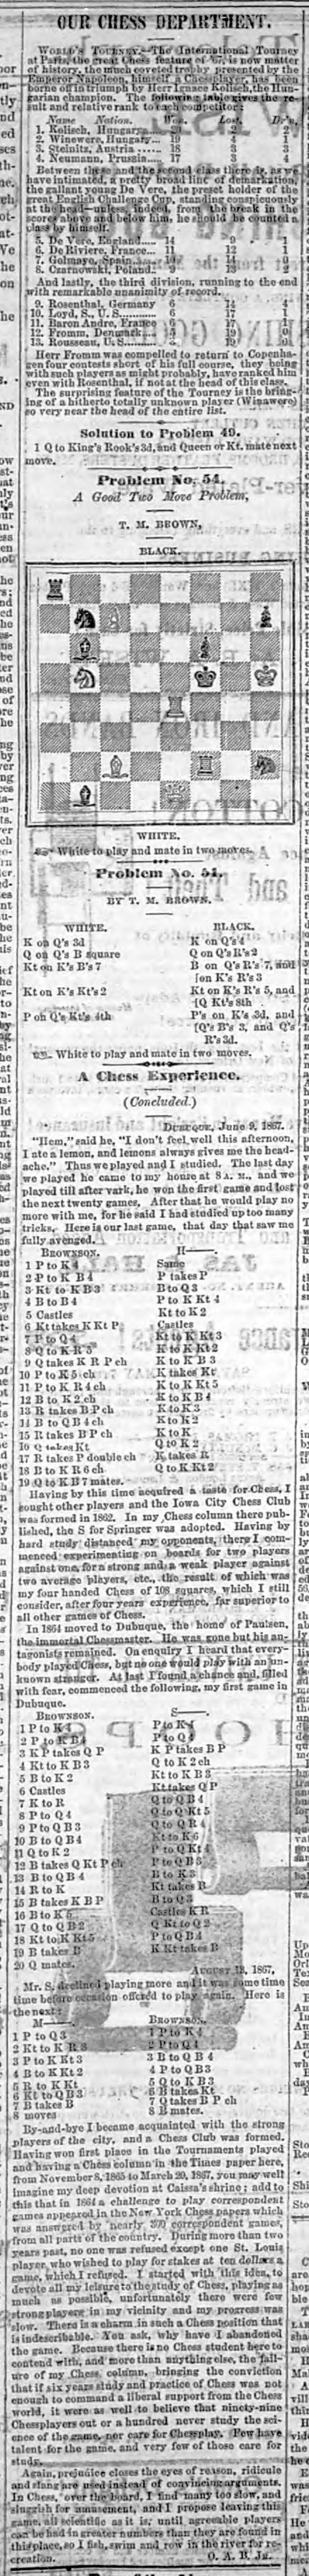 1867.09.13-01 Macon Georgia Weekly Telegraph.jpg